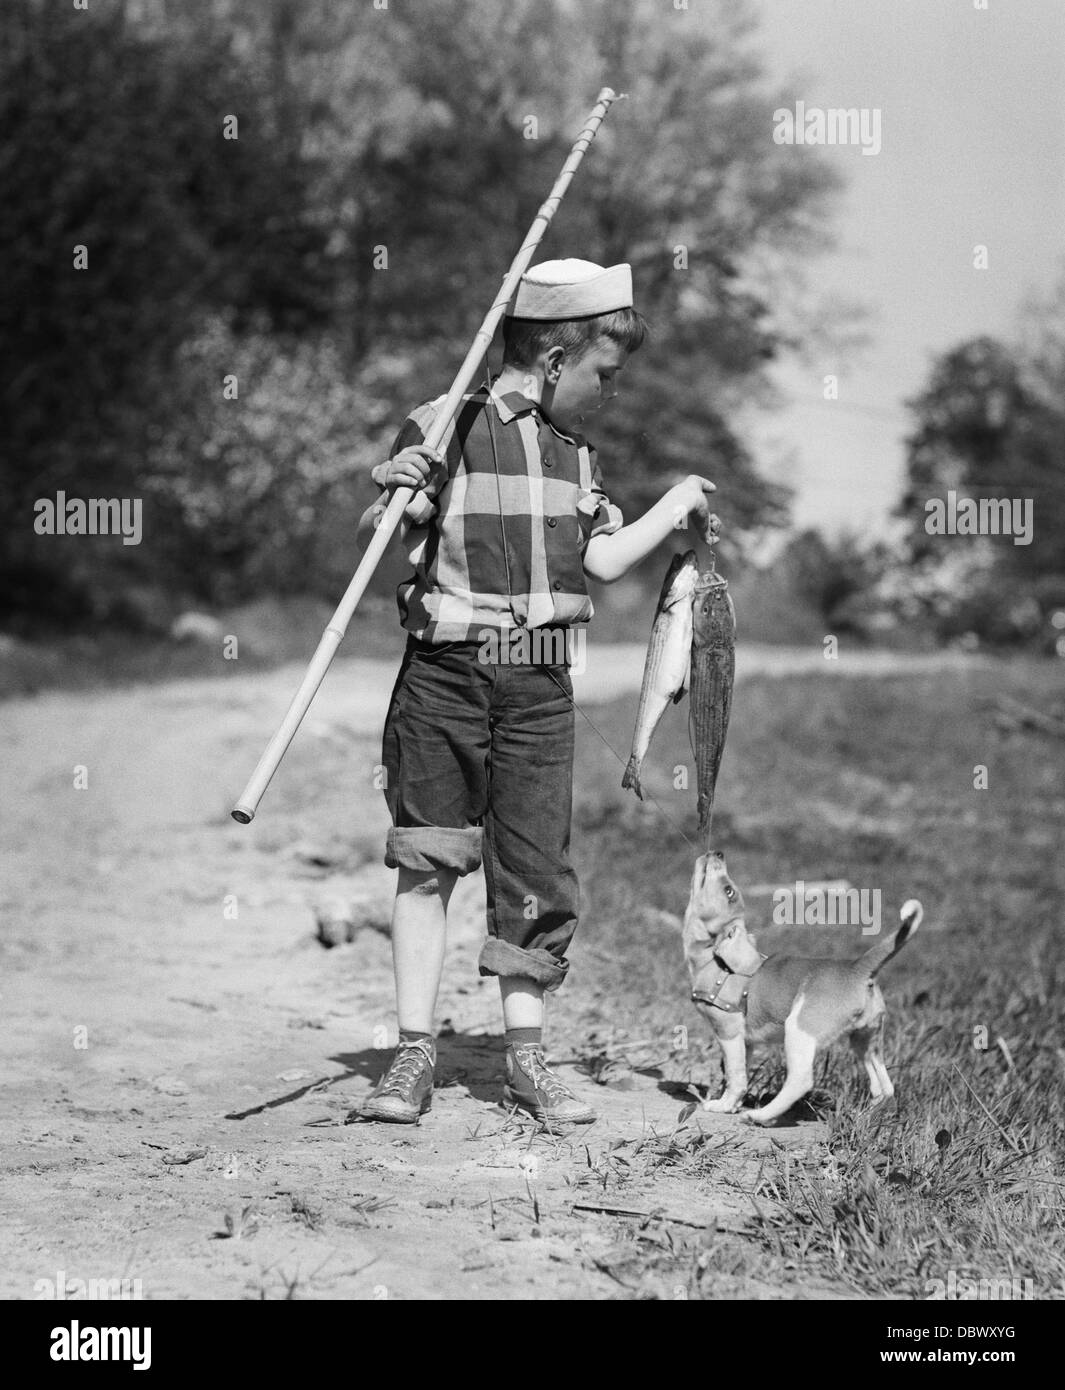 1950s BOY PLAID SHIRT SAILOR HAT FISHING POLE DOG PULLING ON TAIL OF CAUGHT  FISH Stock Photo - Alamy